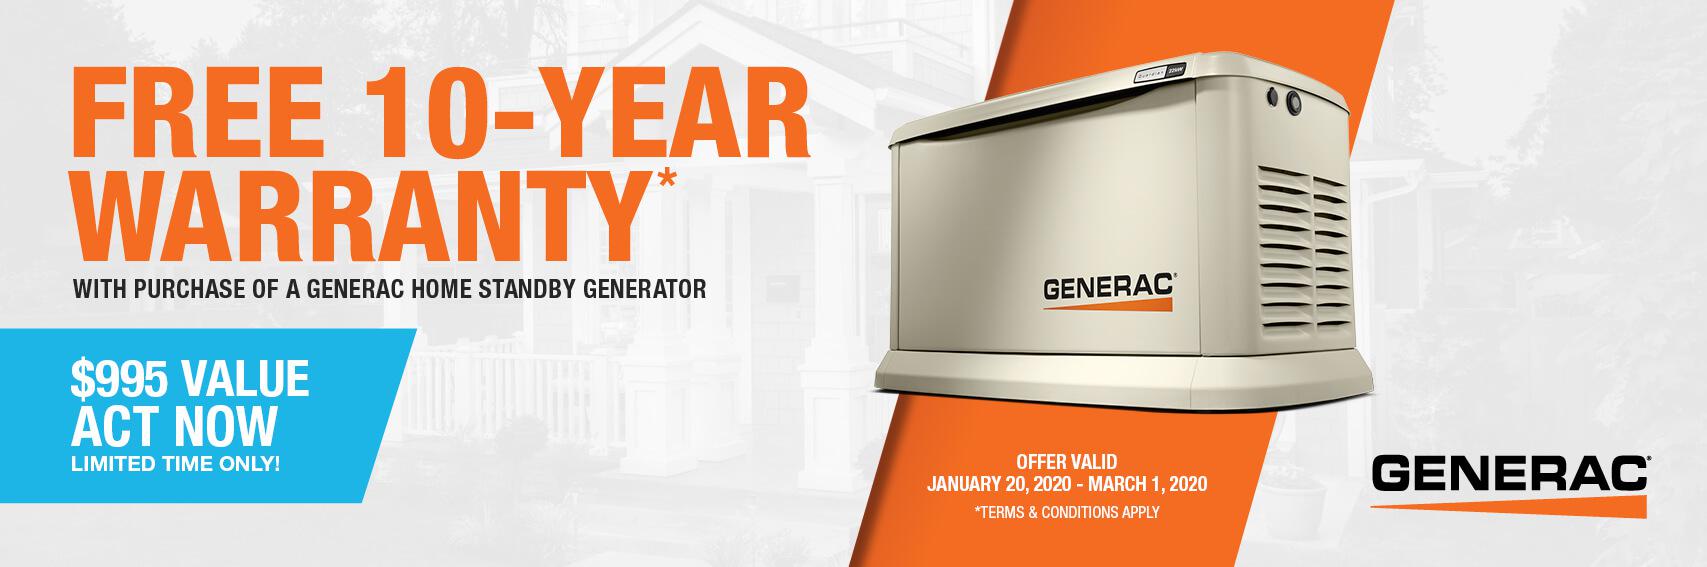 Homestandby Generator Deal | Warranty Offer | Generac Dealer | Miller Place, NY